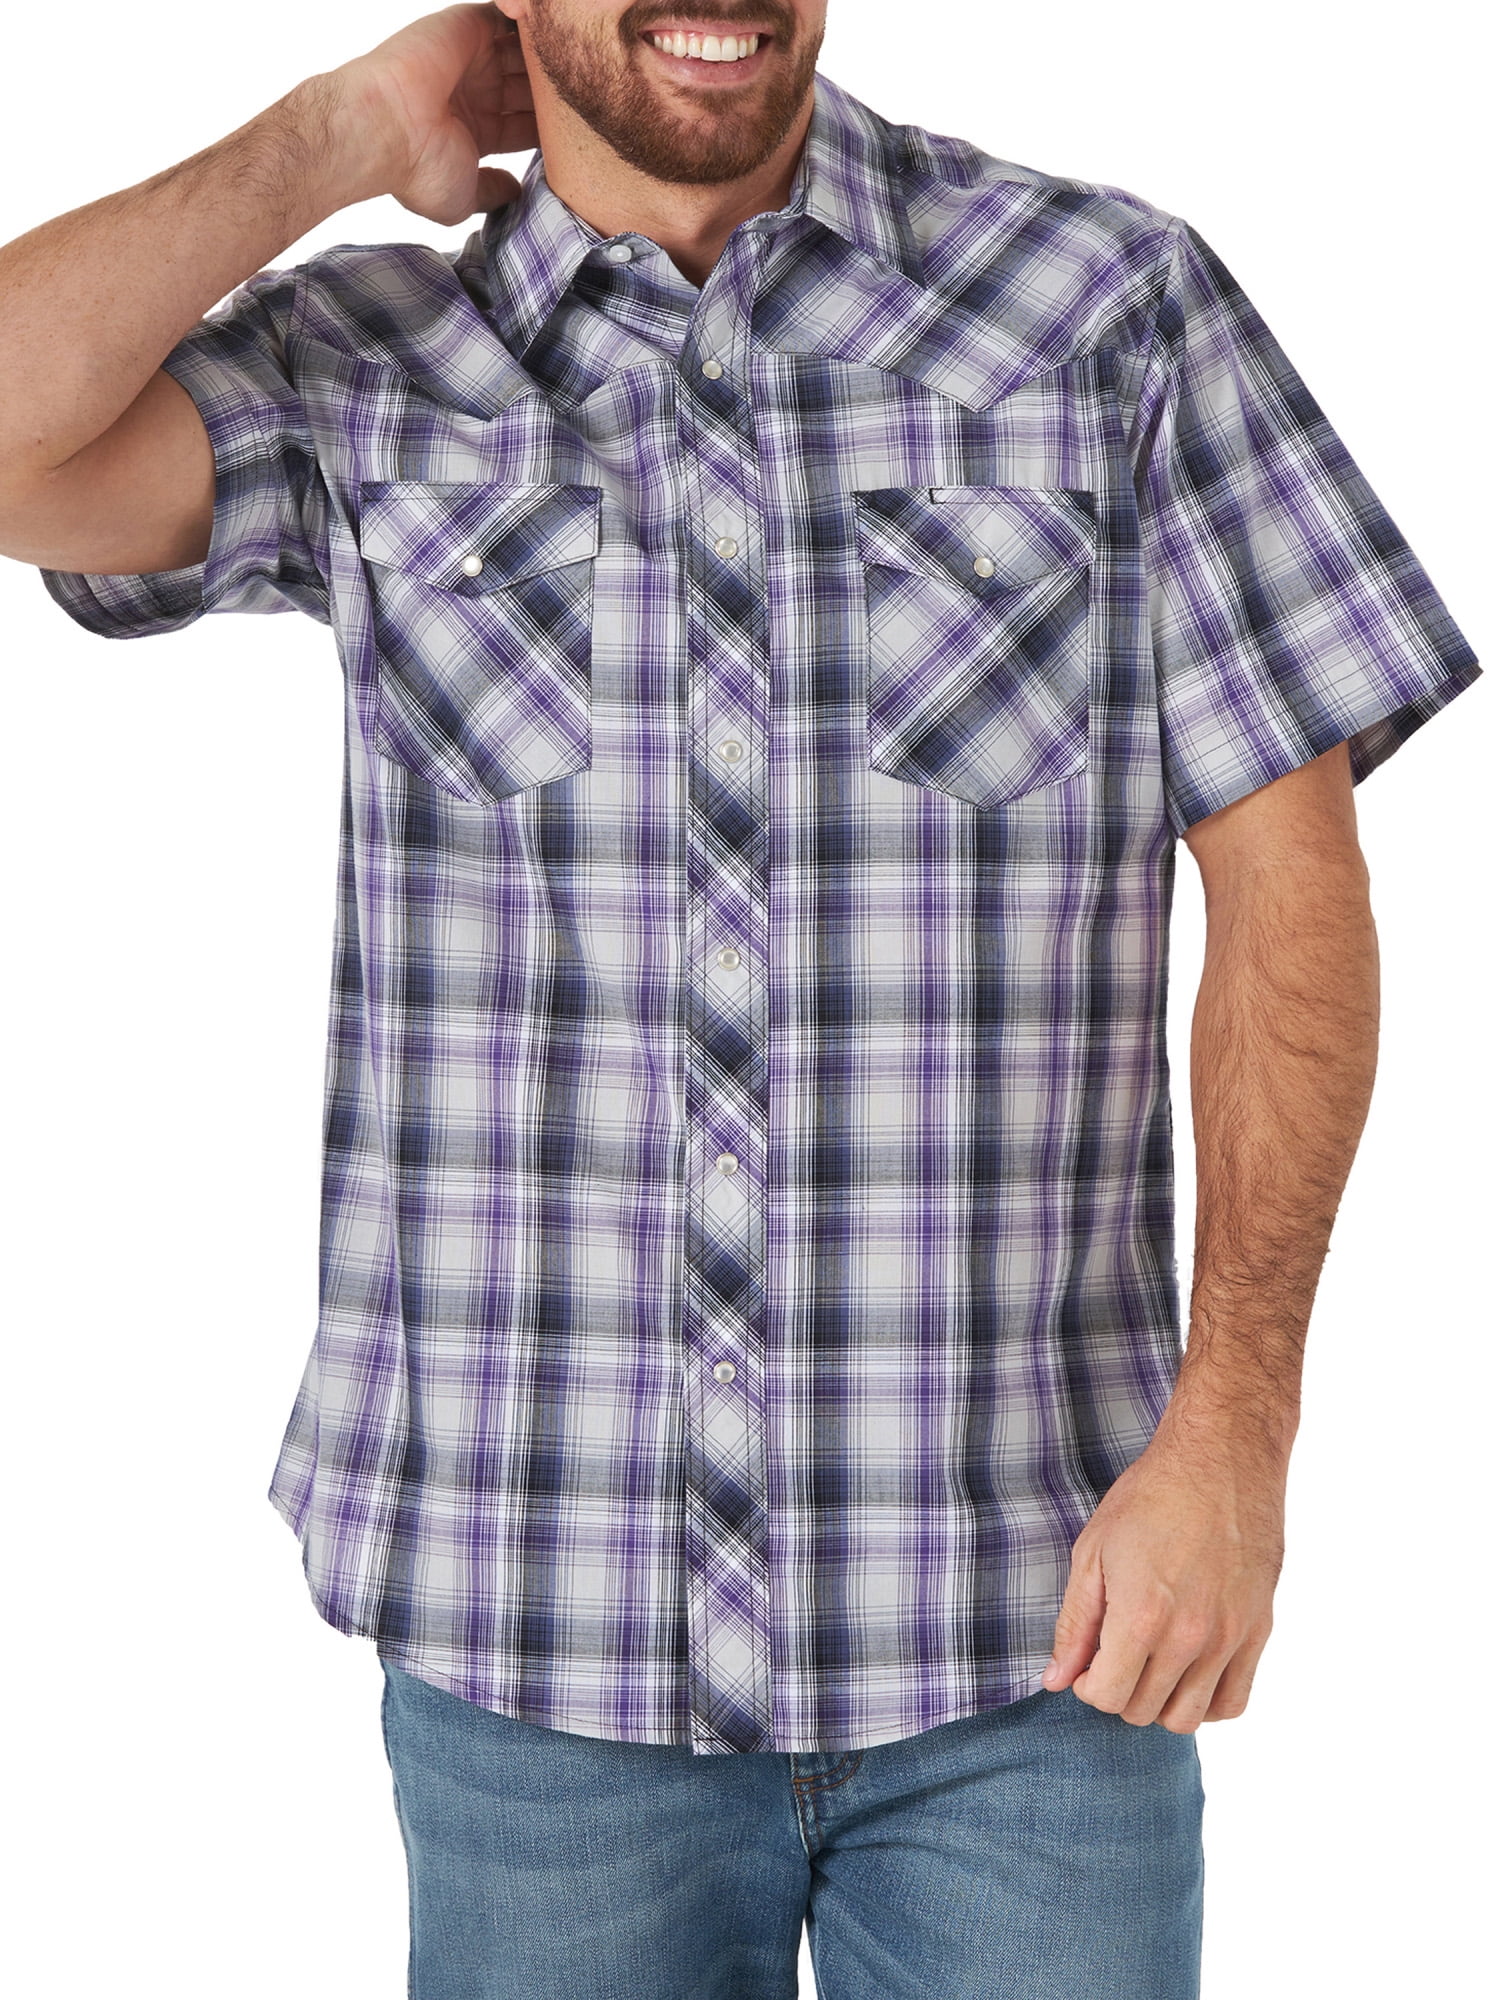 Wrangler Men's Western Short Sleeve Plaid Shirt - Walmart.com